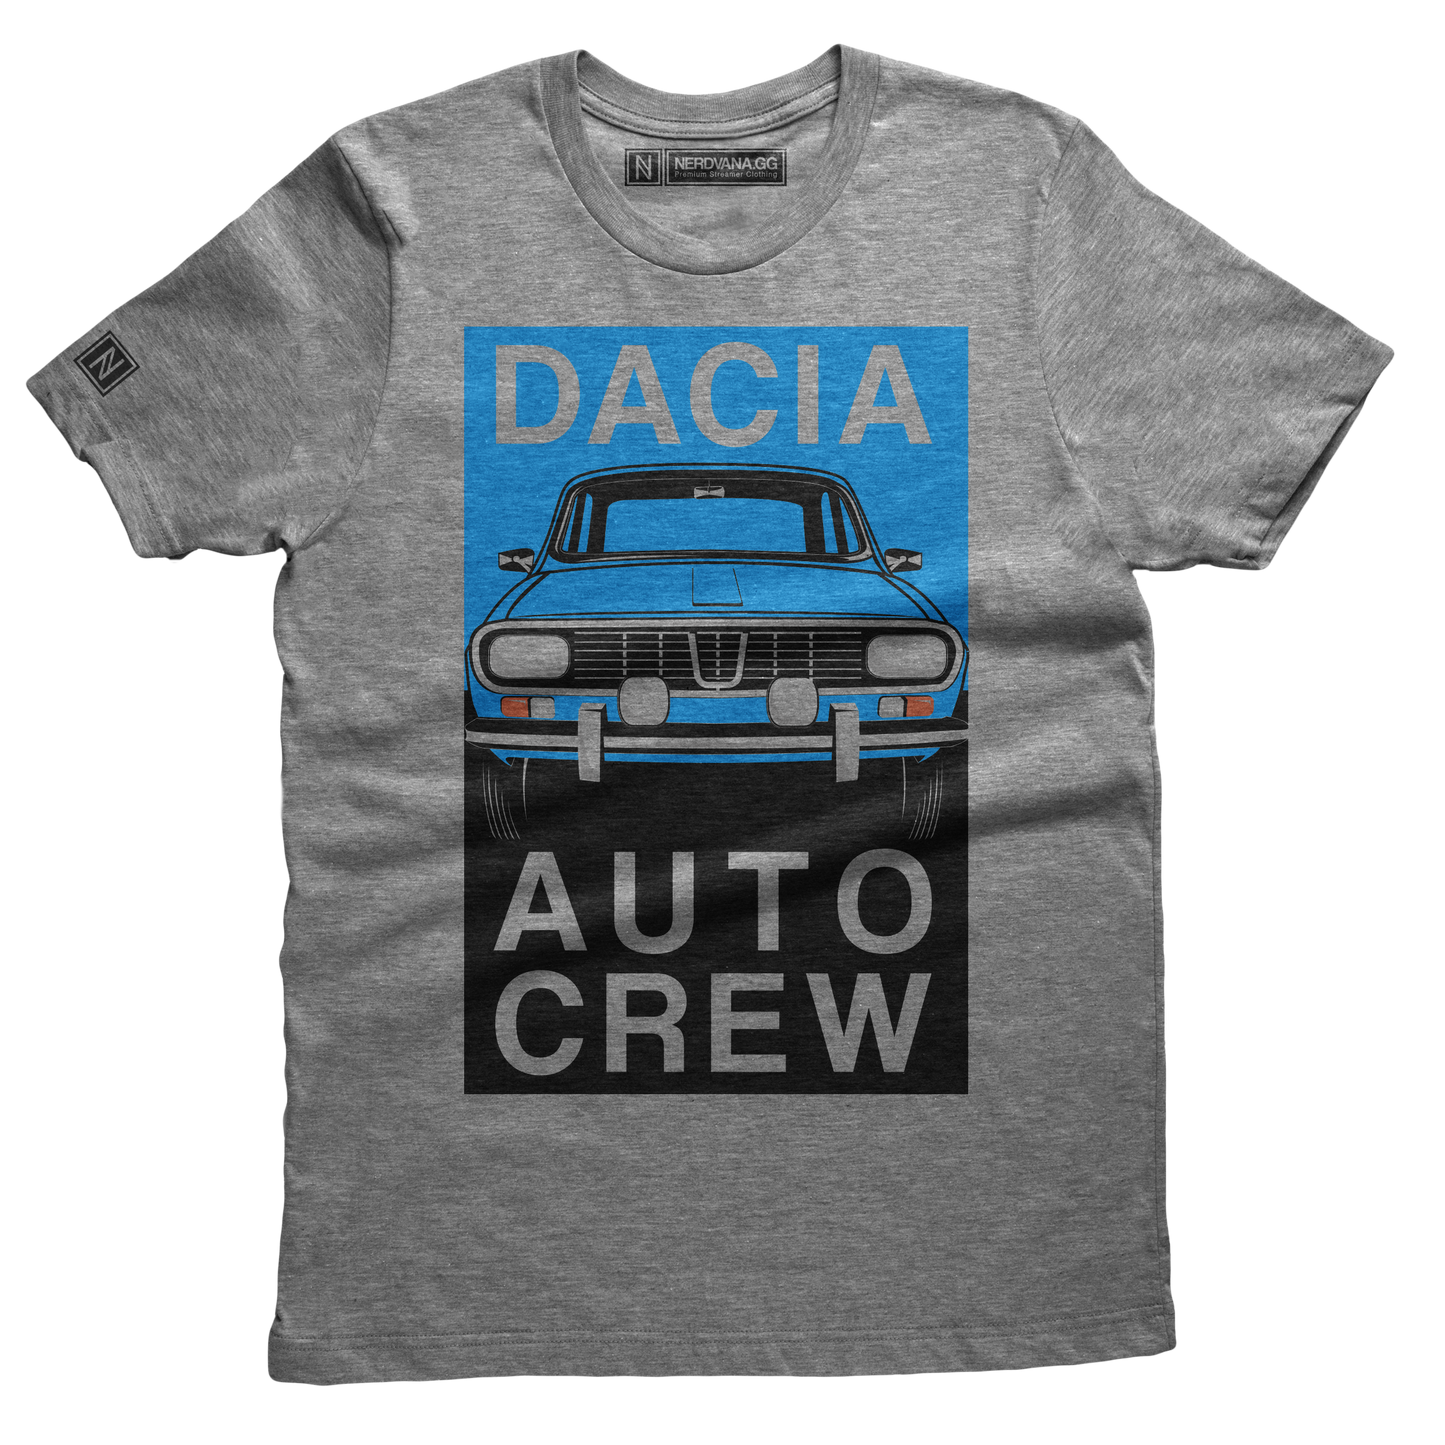 Dacia Auto Crew Azure Tee